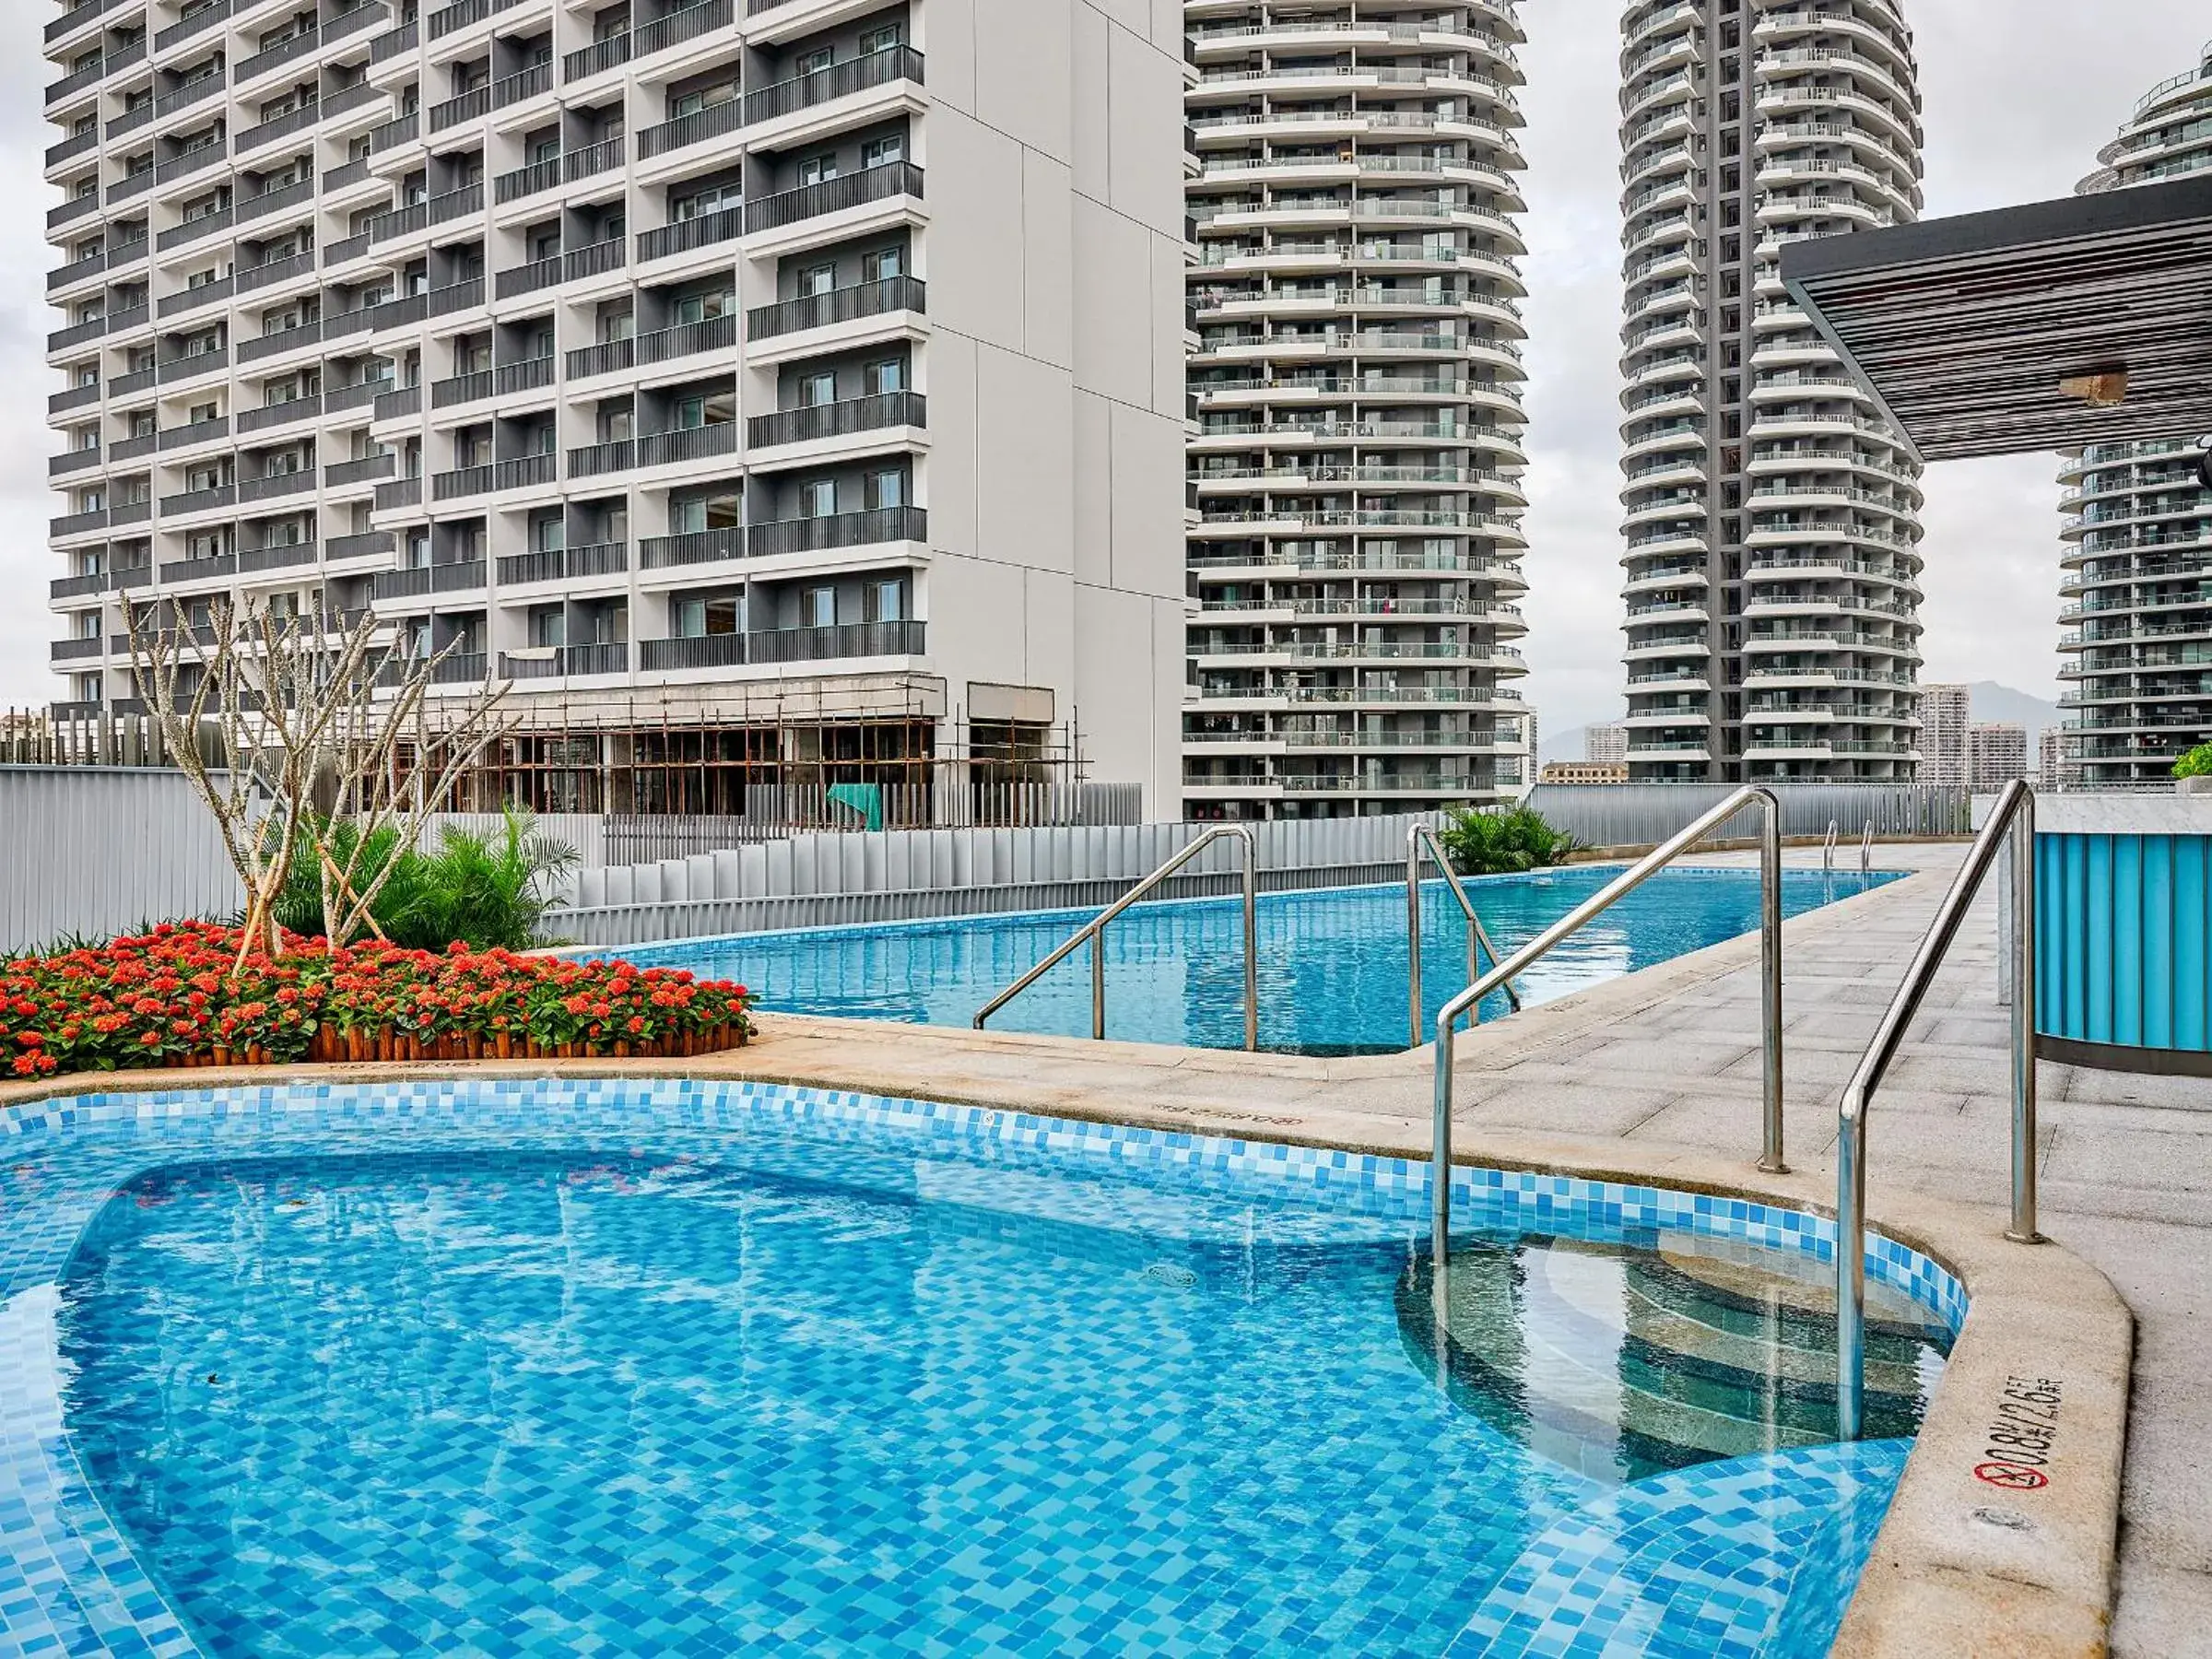 , Swimming Pool in Hilton Garden Inn Sanya, China